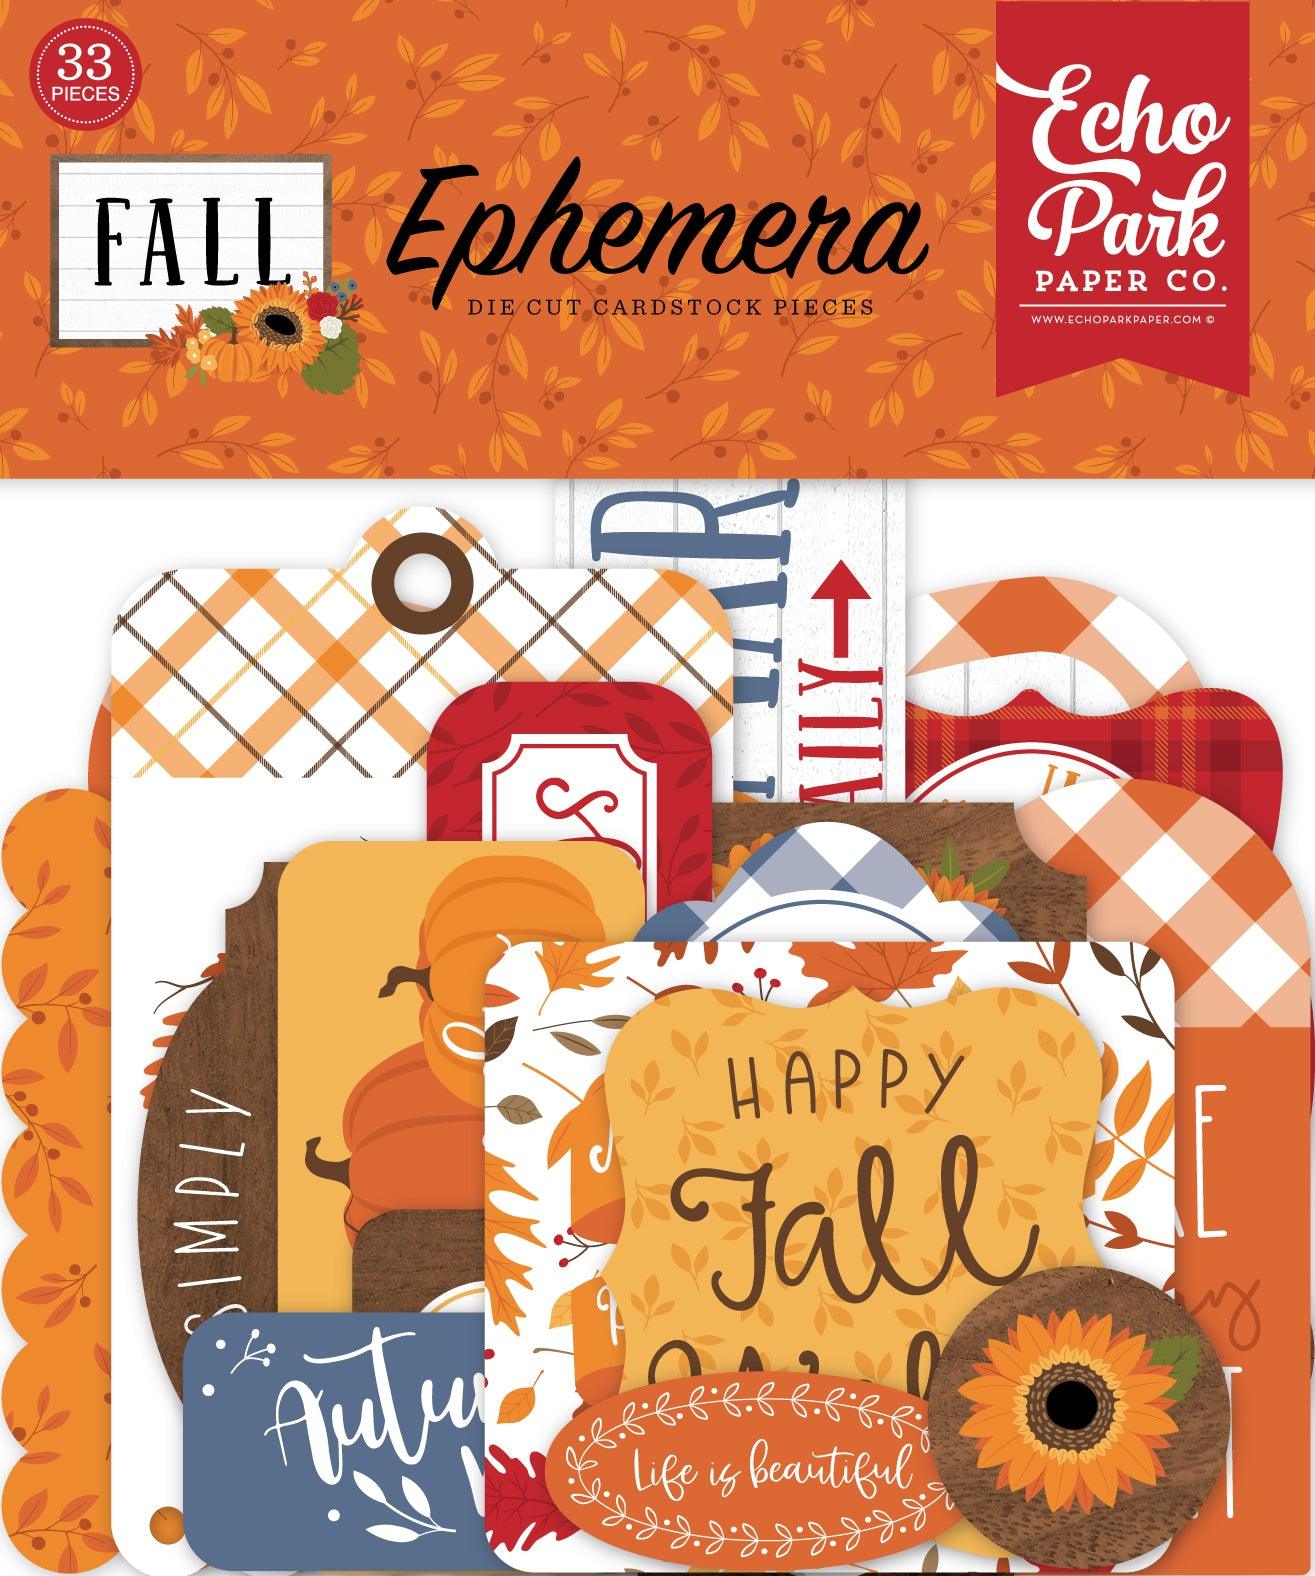 Fall Collection 5 x 5 Scrapbook Ephemera Die Cuts by Echo Park Paper - Scrapbook Supply Companies